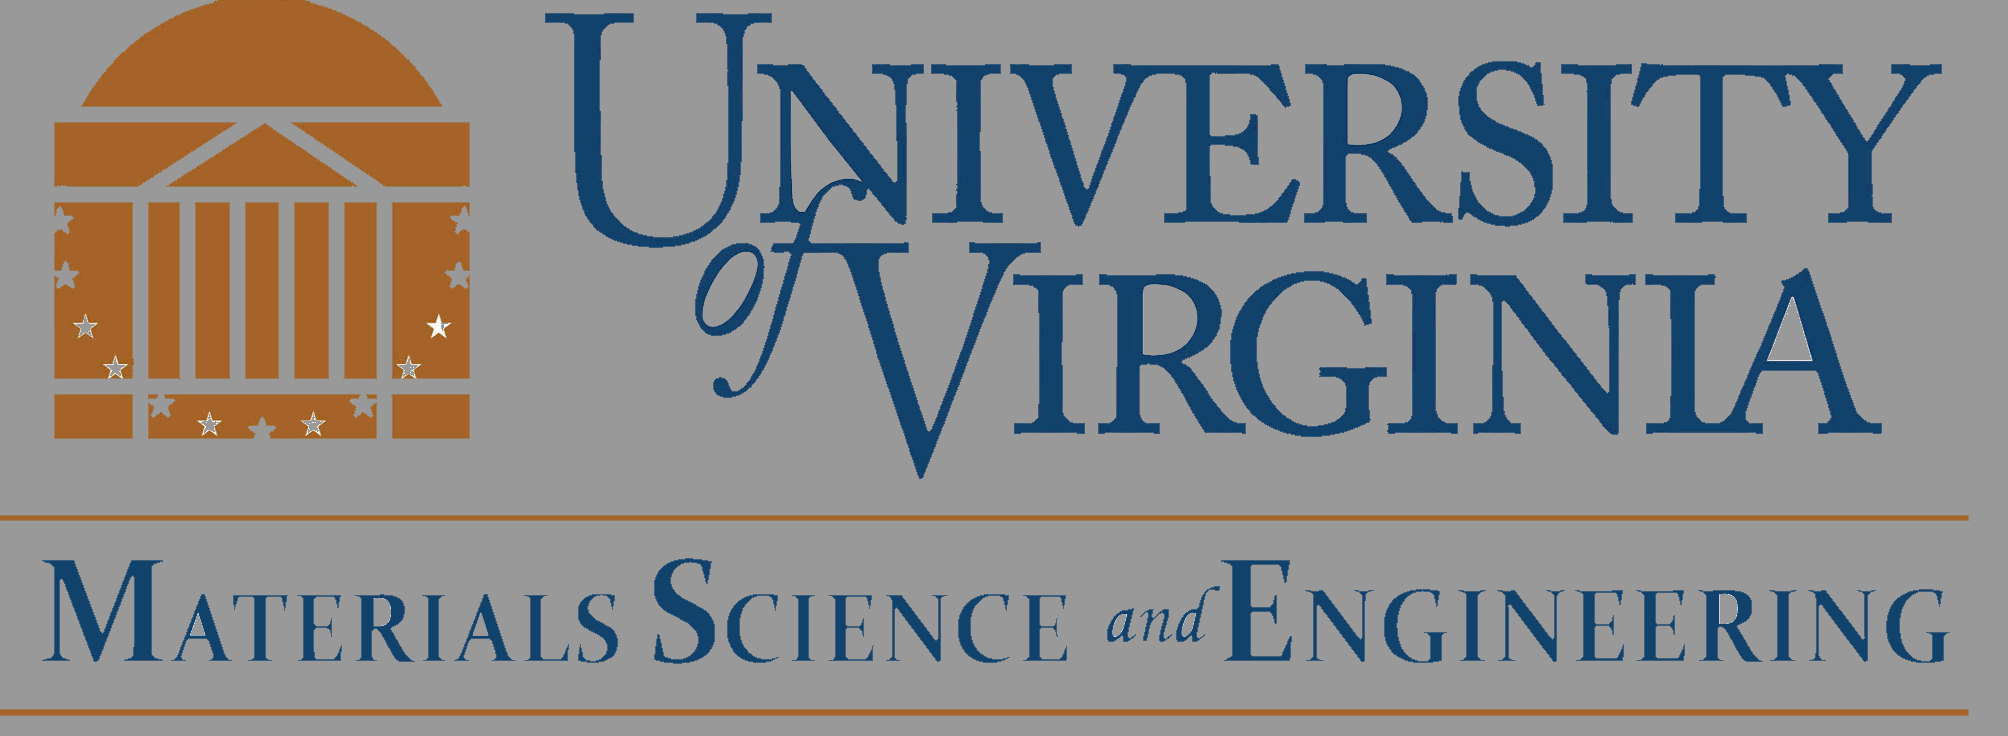 university of virginia logo 09